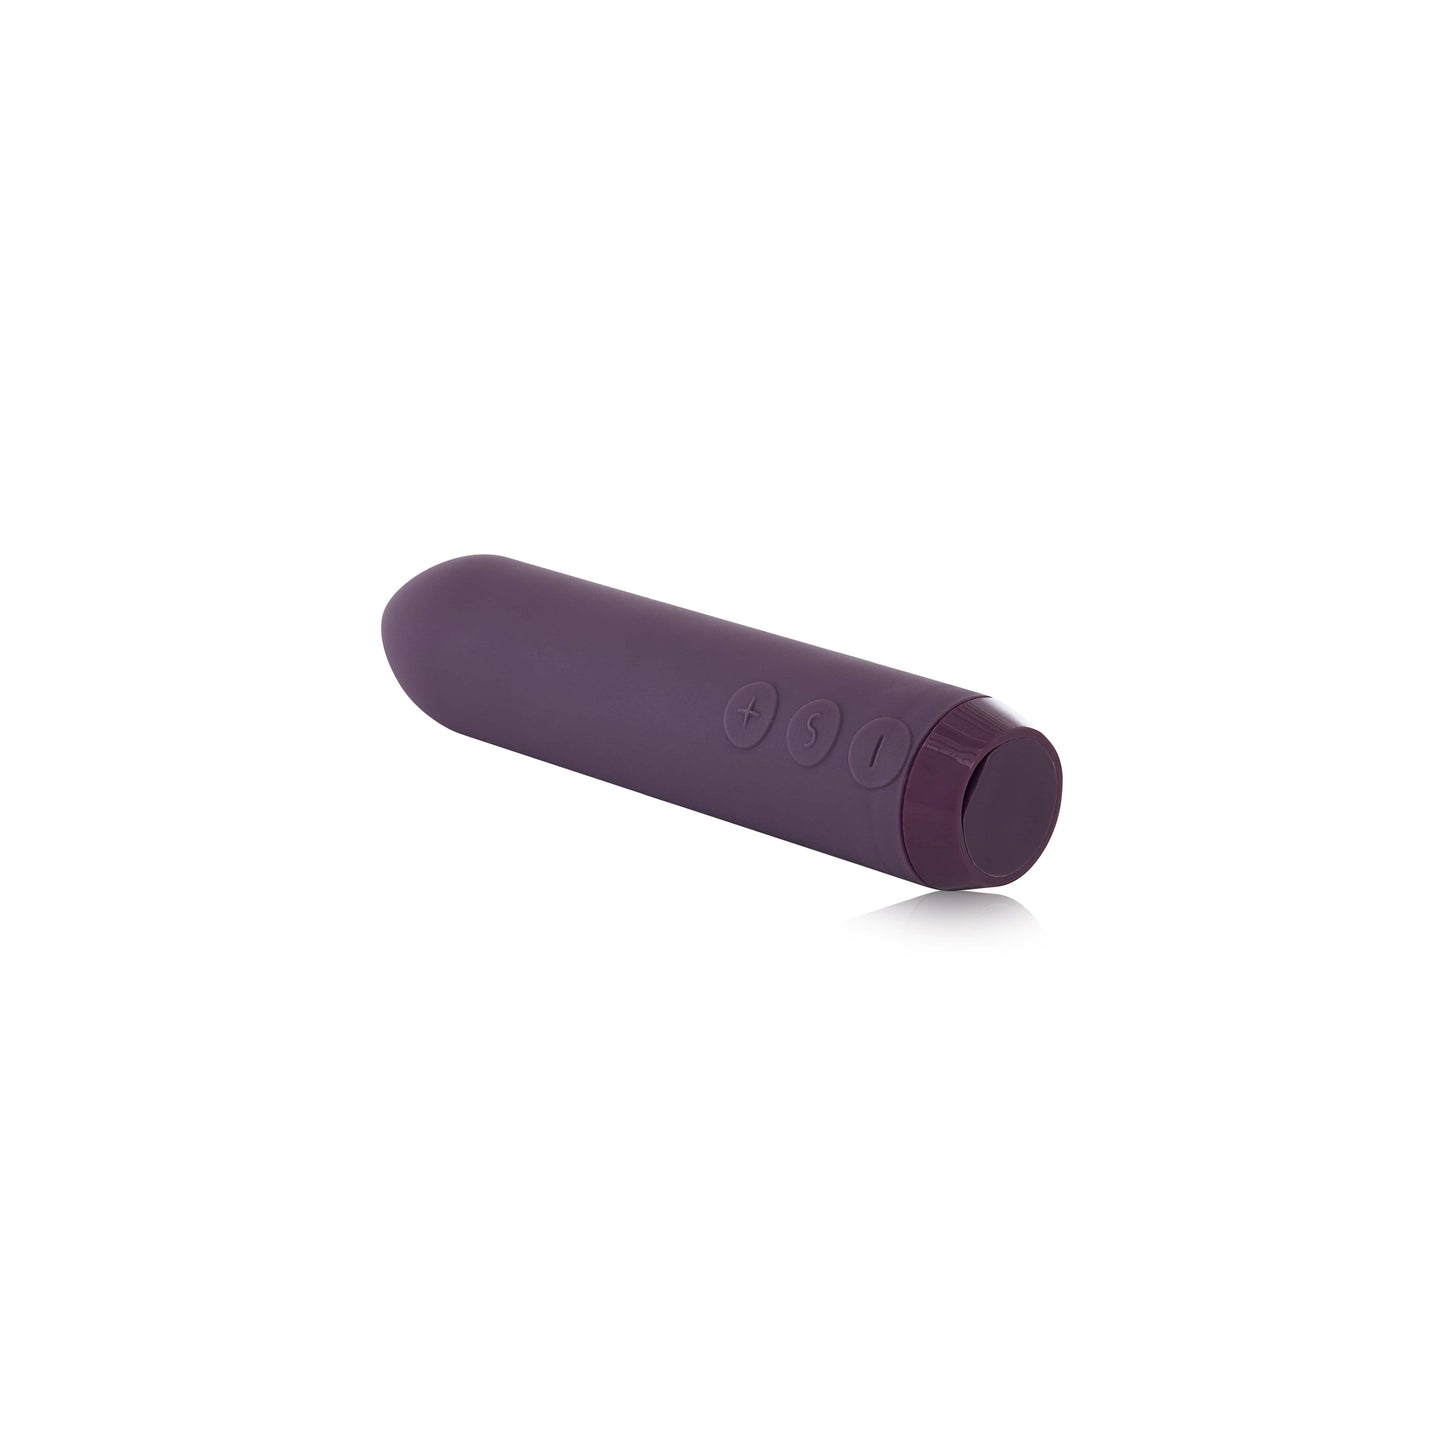 Classic Bullet Vibrator in purple lying flat 